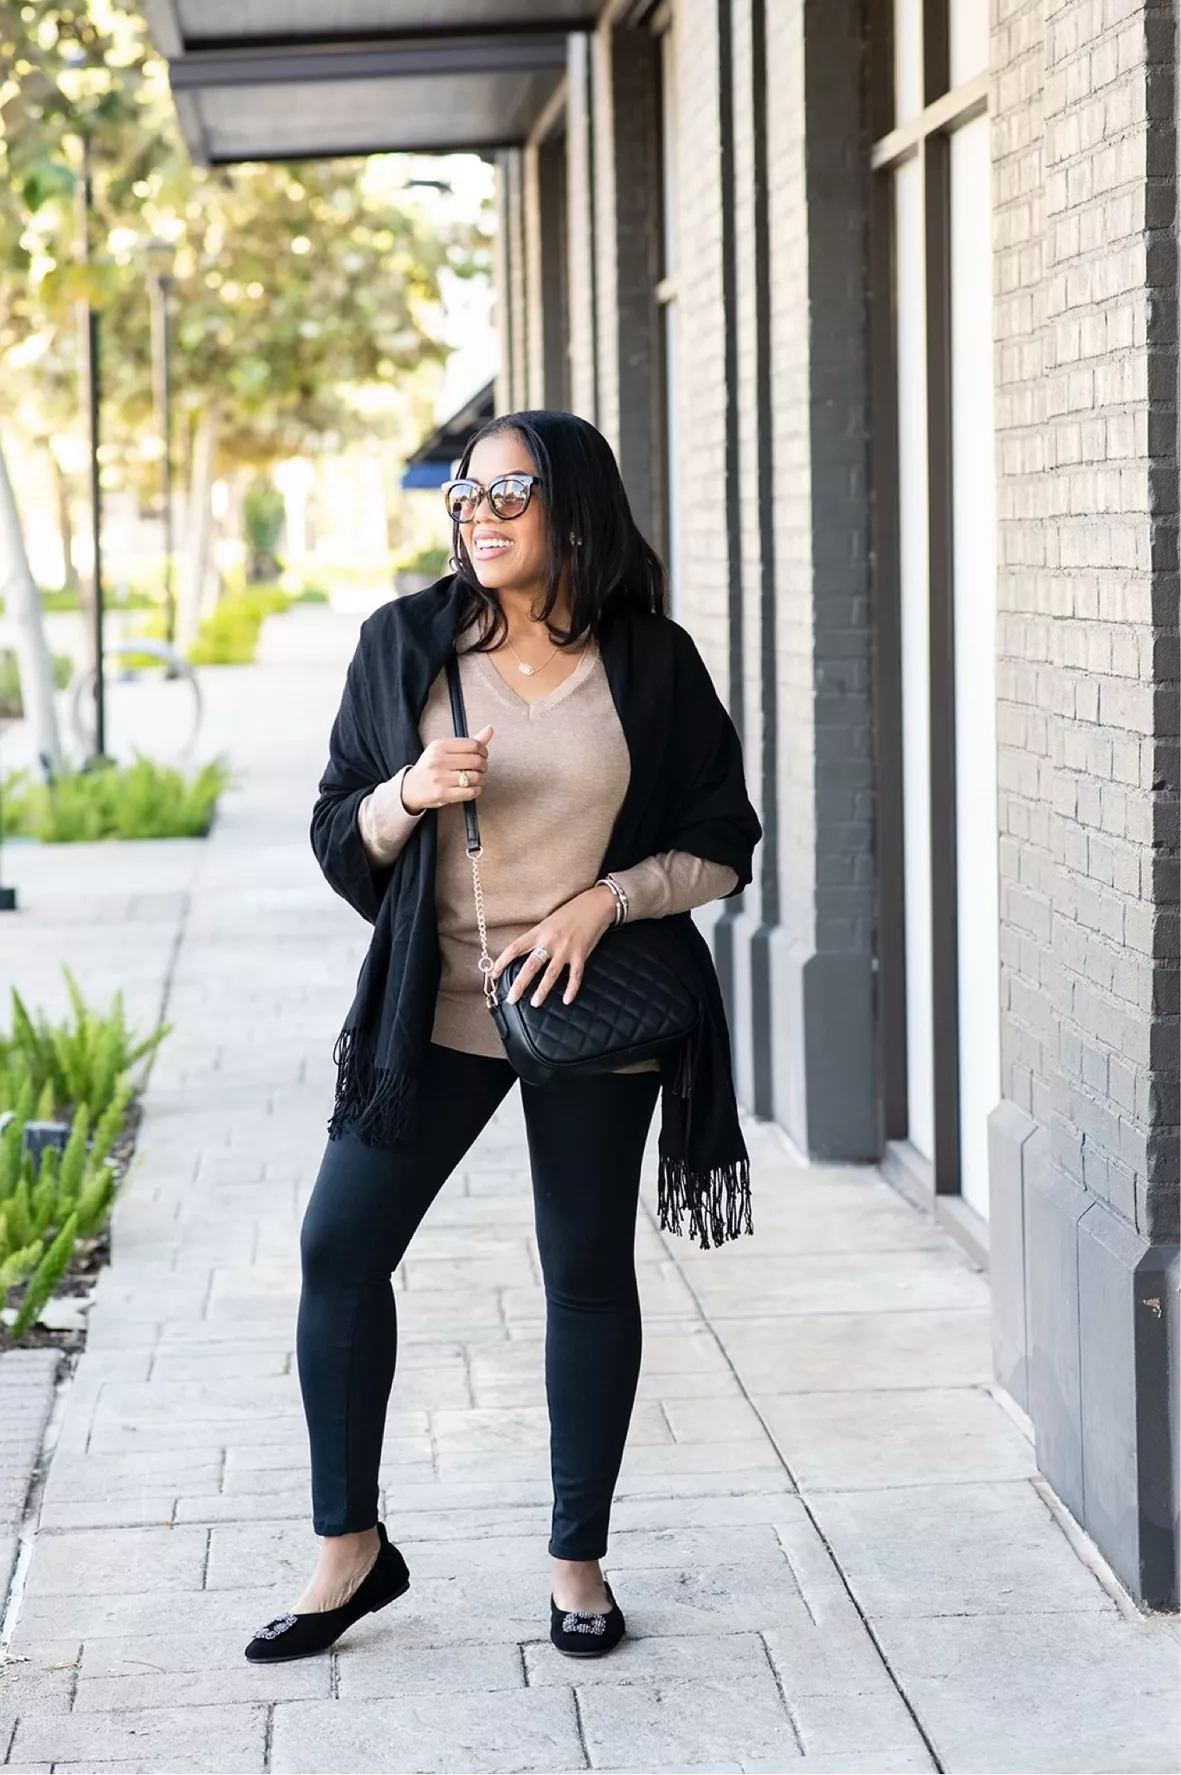 Essential trendy womens black leggings